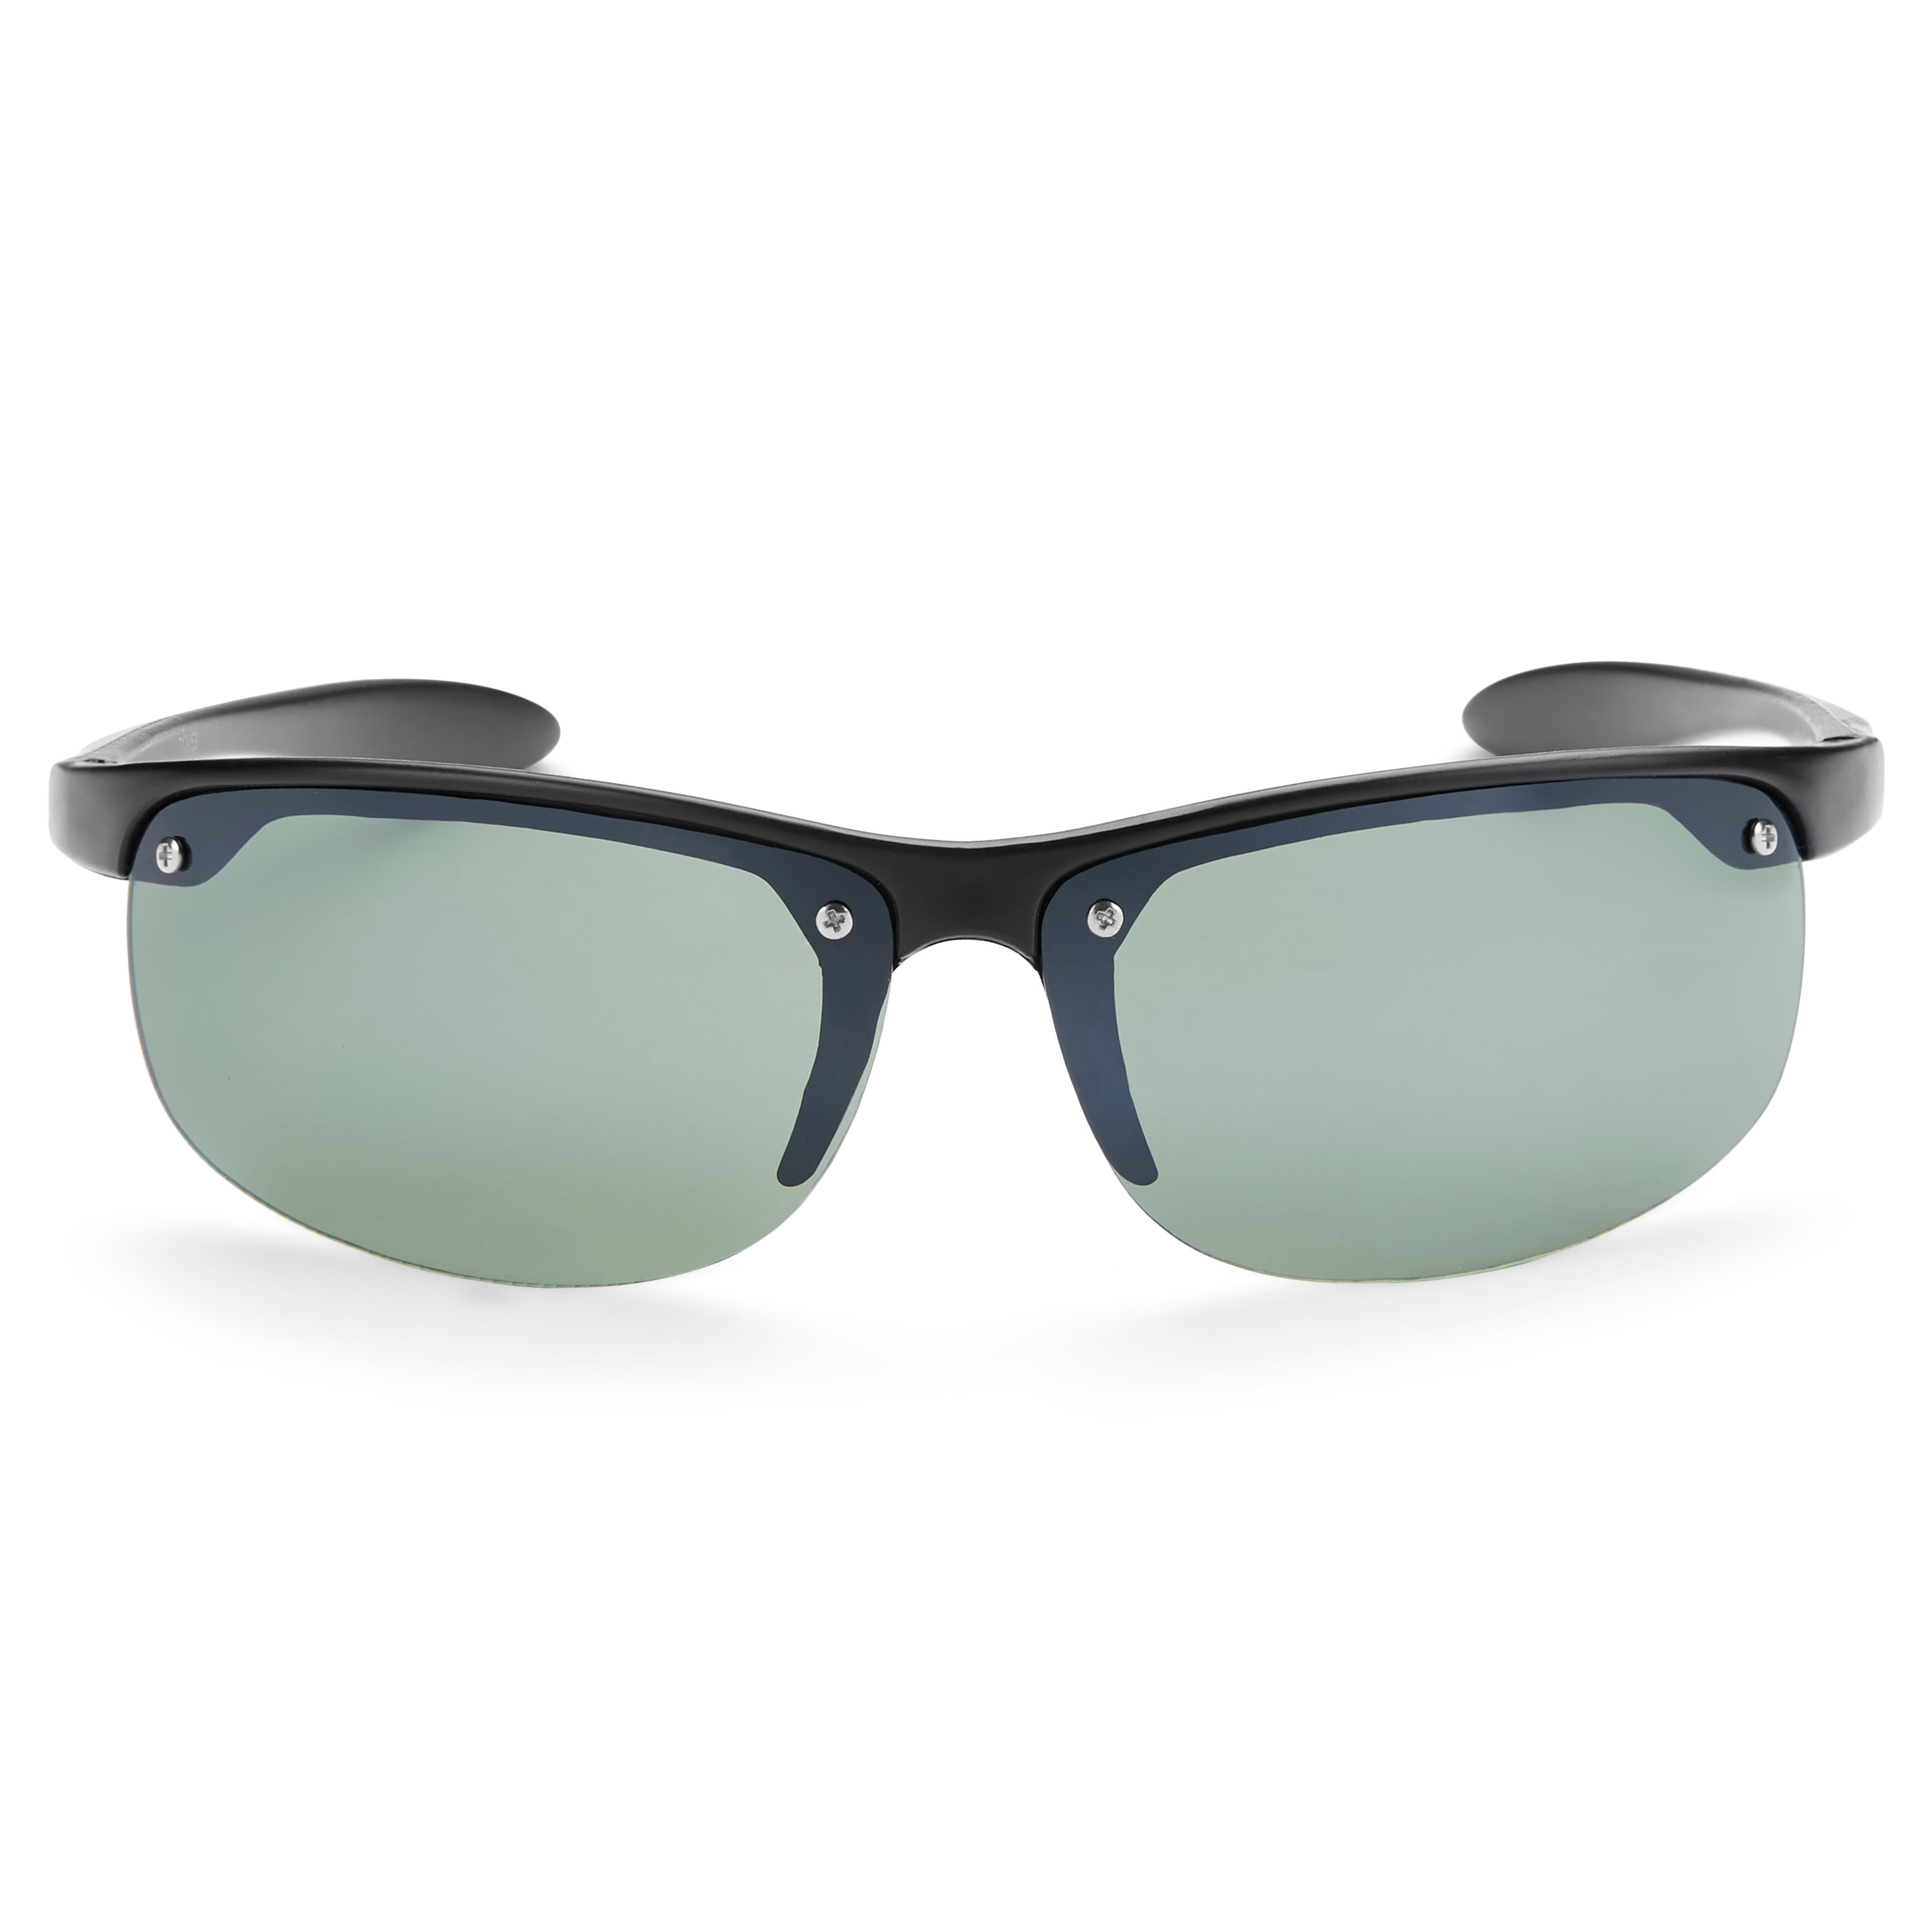 Black & Green Wraparound Sports Sunglasses